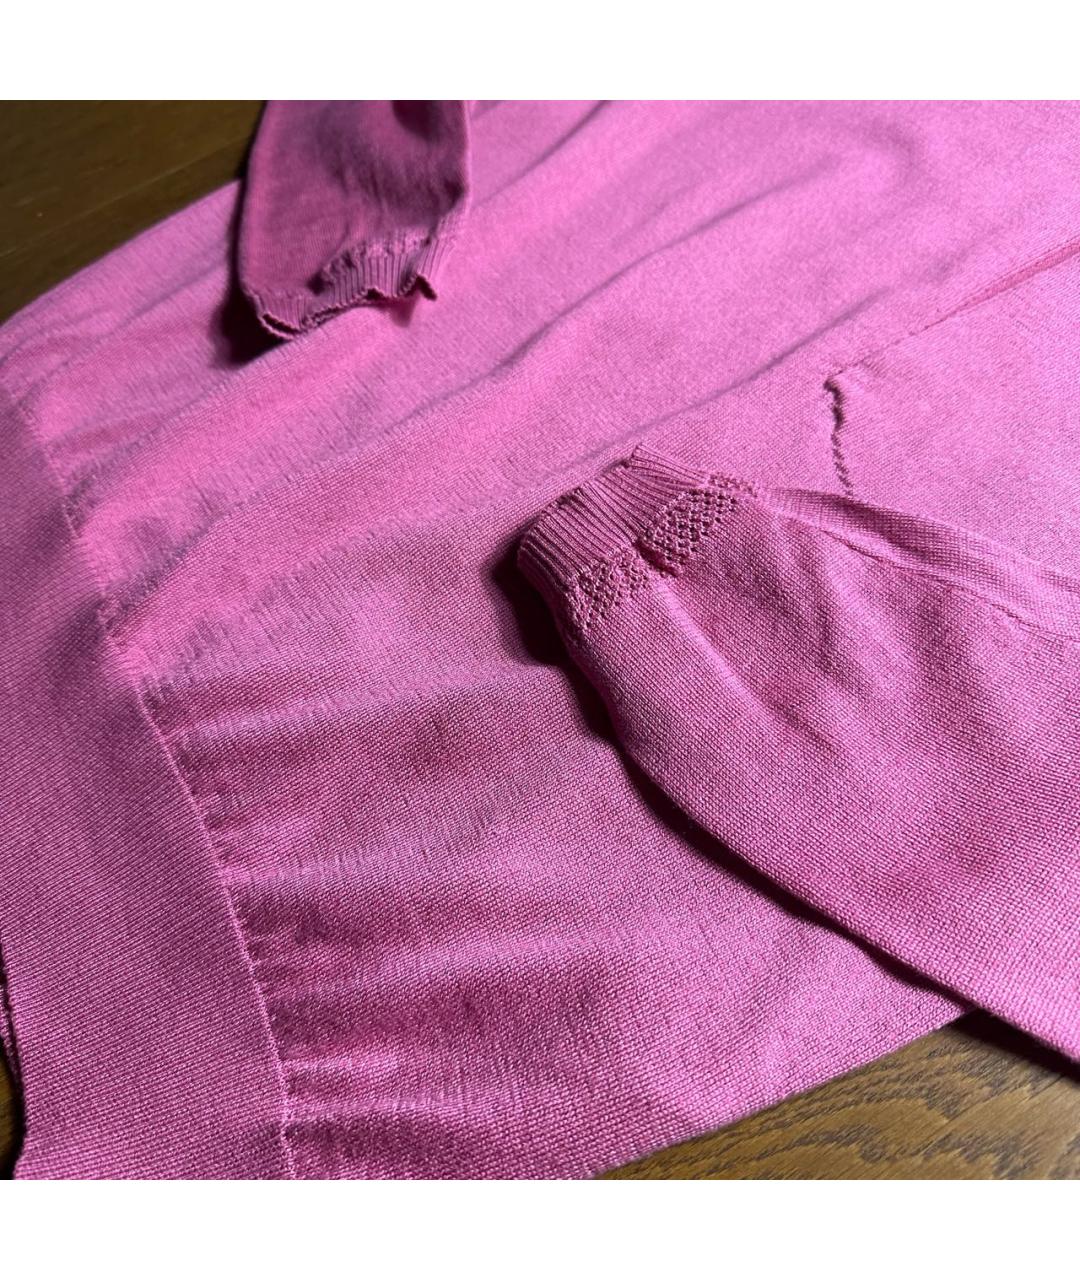 STONE ISLAND SHADOW PROJECT Розовый хлопковый джемпер / свитер, фото 5